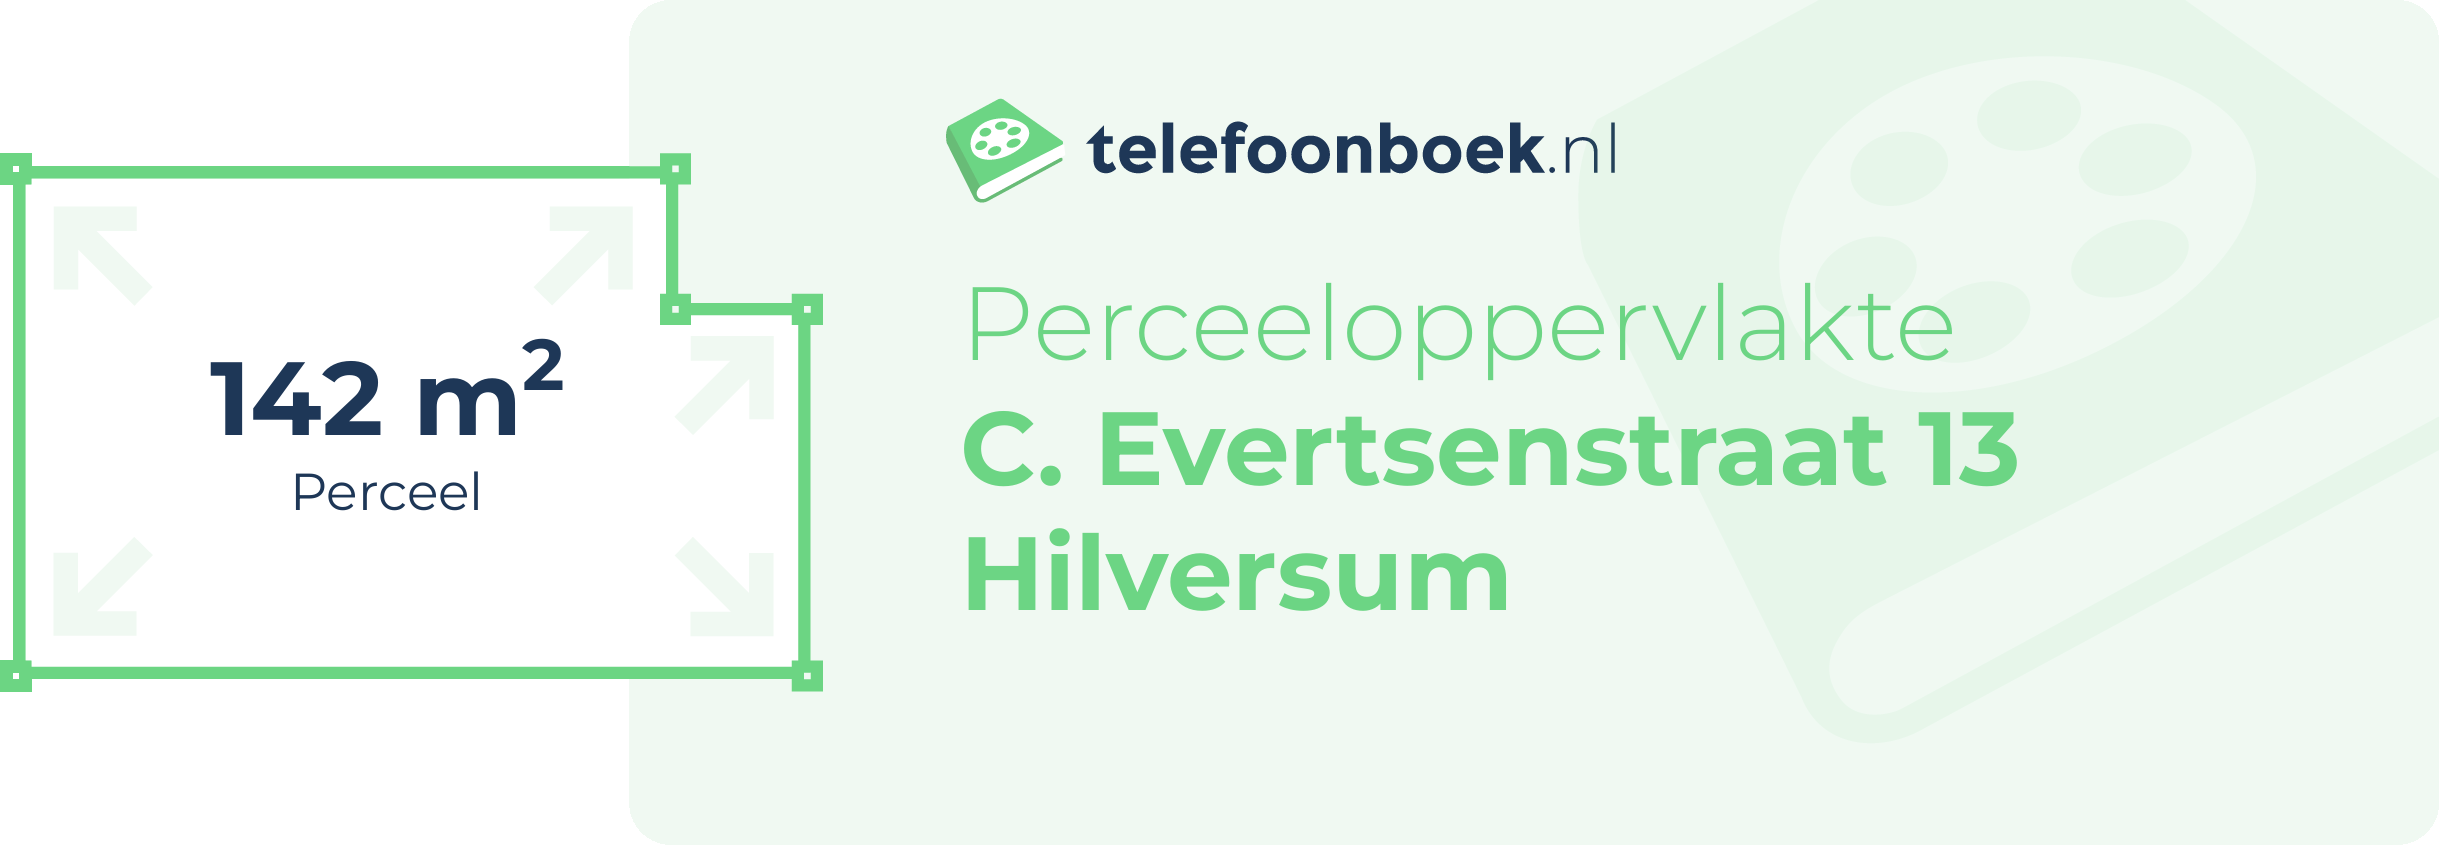 Perceeloppervlakte C. Evertsenstraat 13 Hilversum